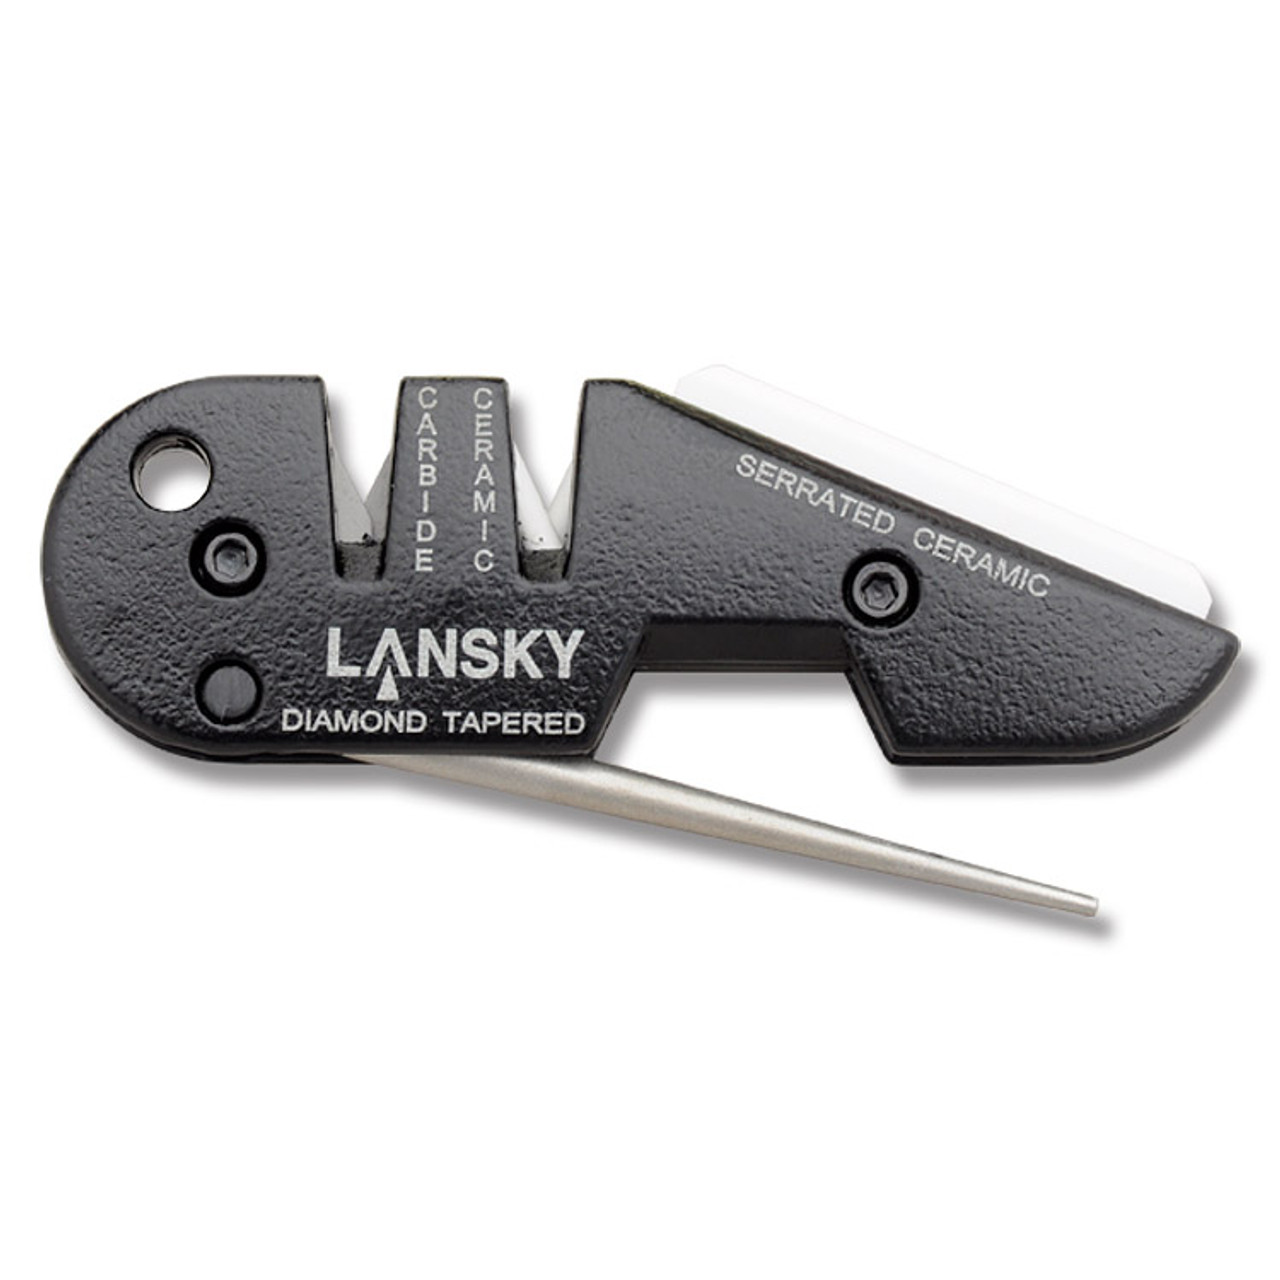 Knife Sharpener Review : Lansky Blade Medic 